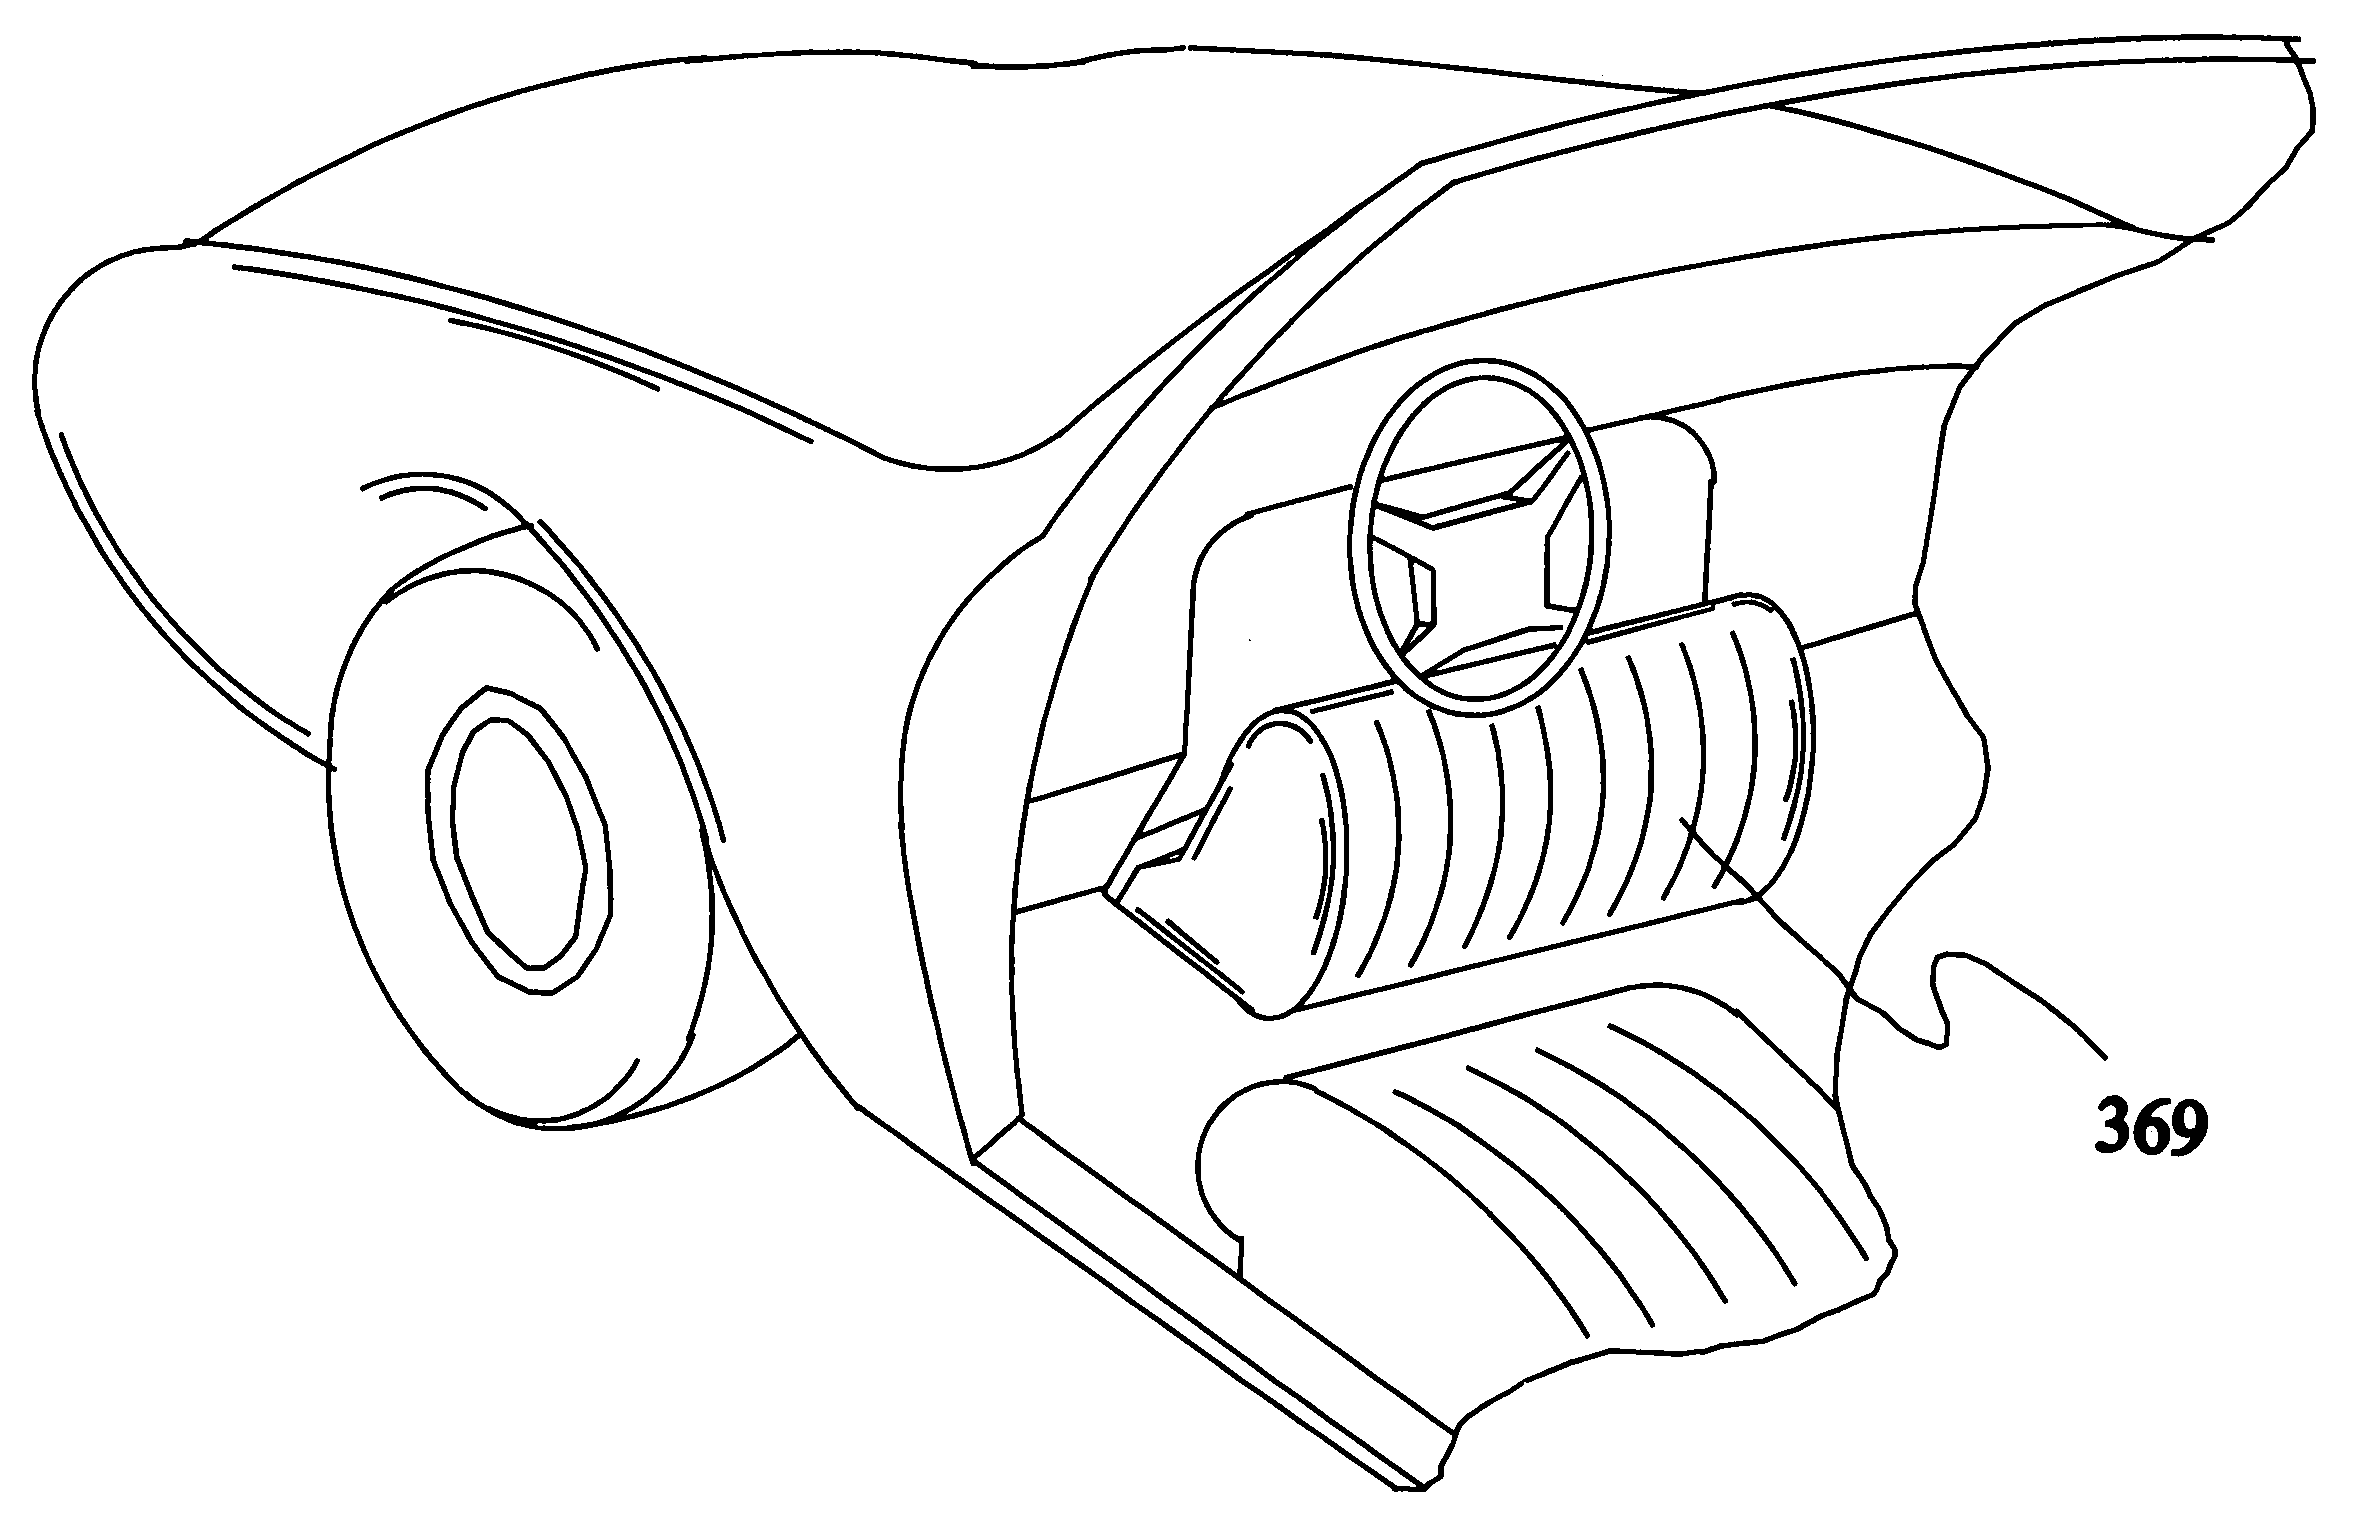 Knee bolster airbag system